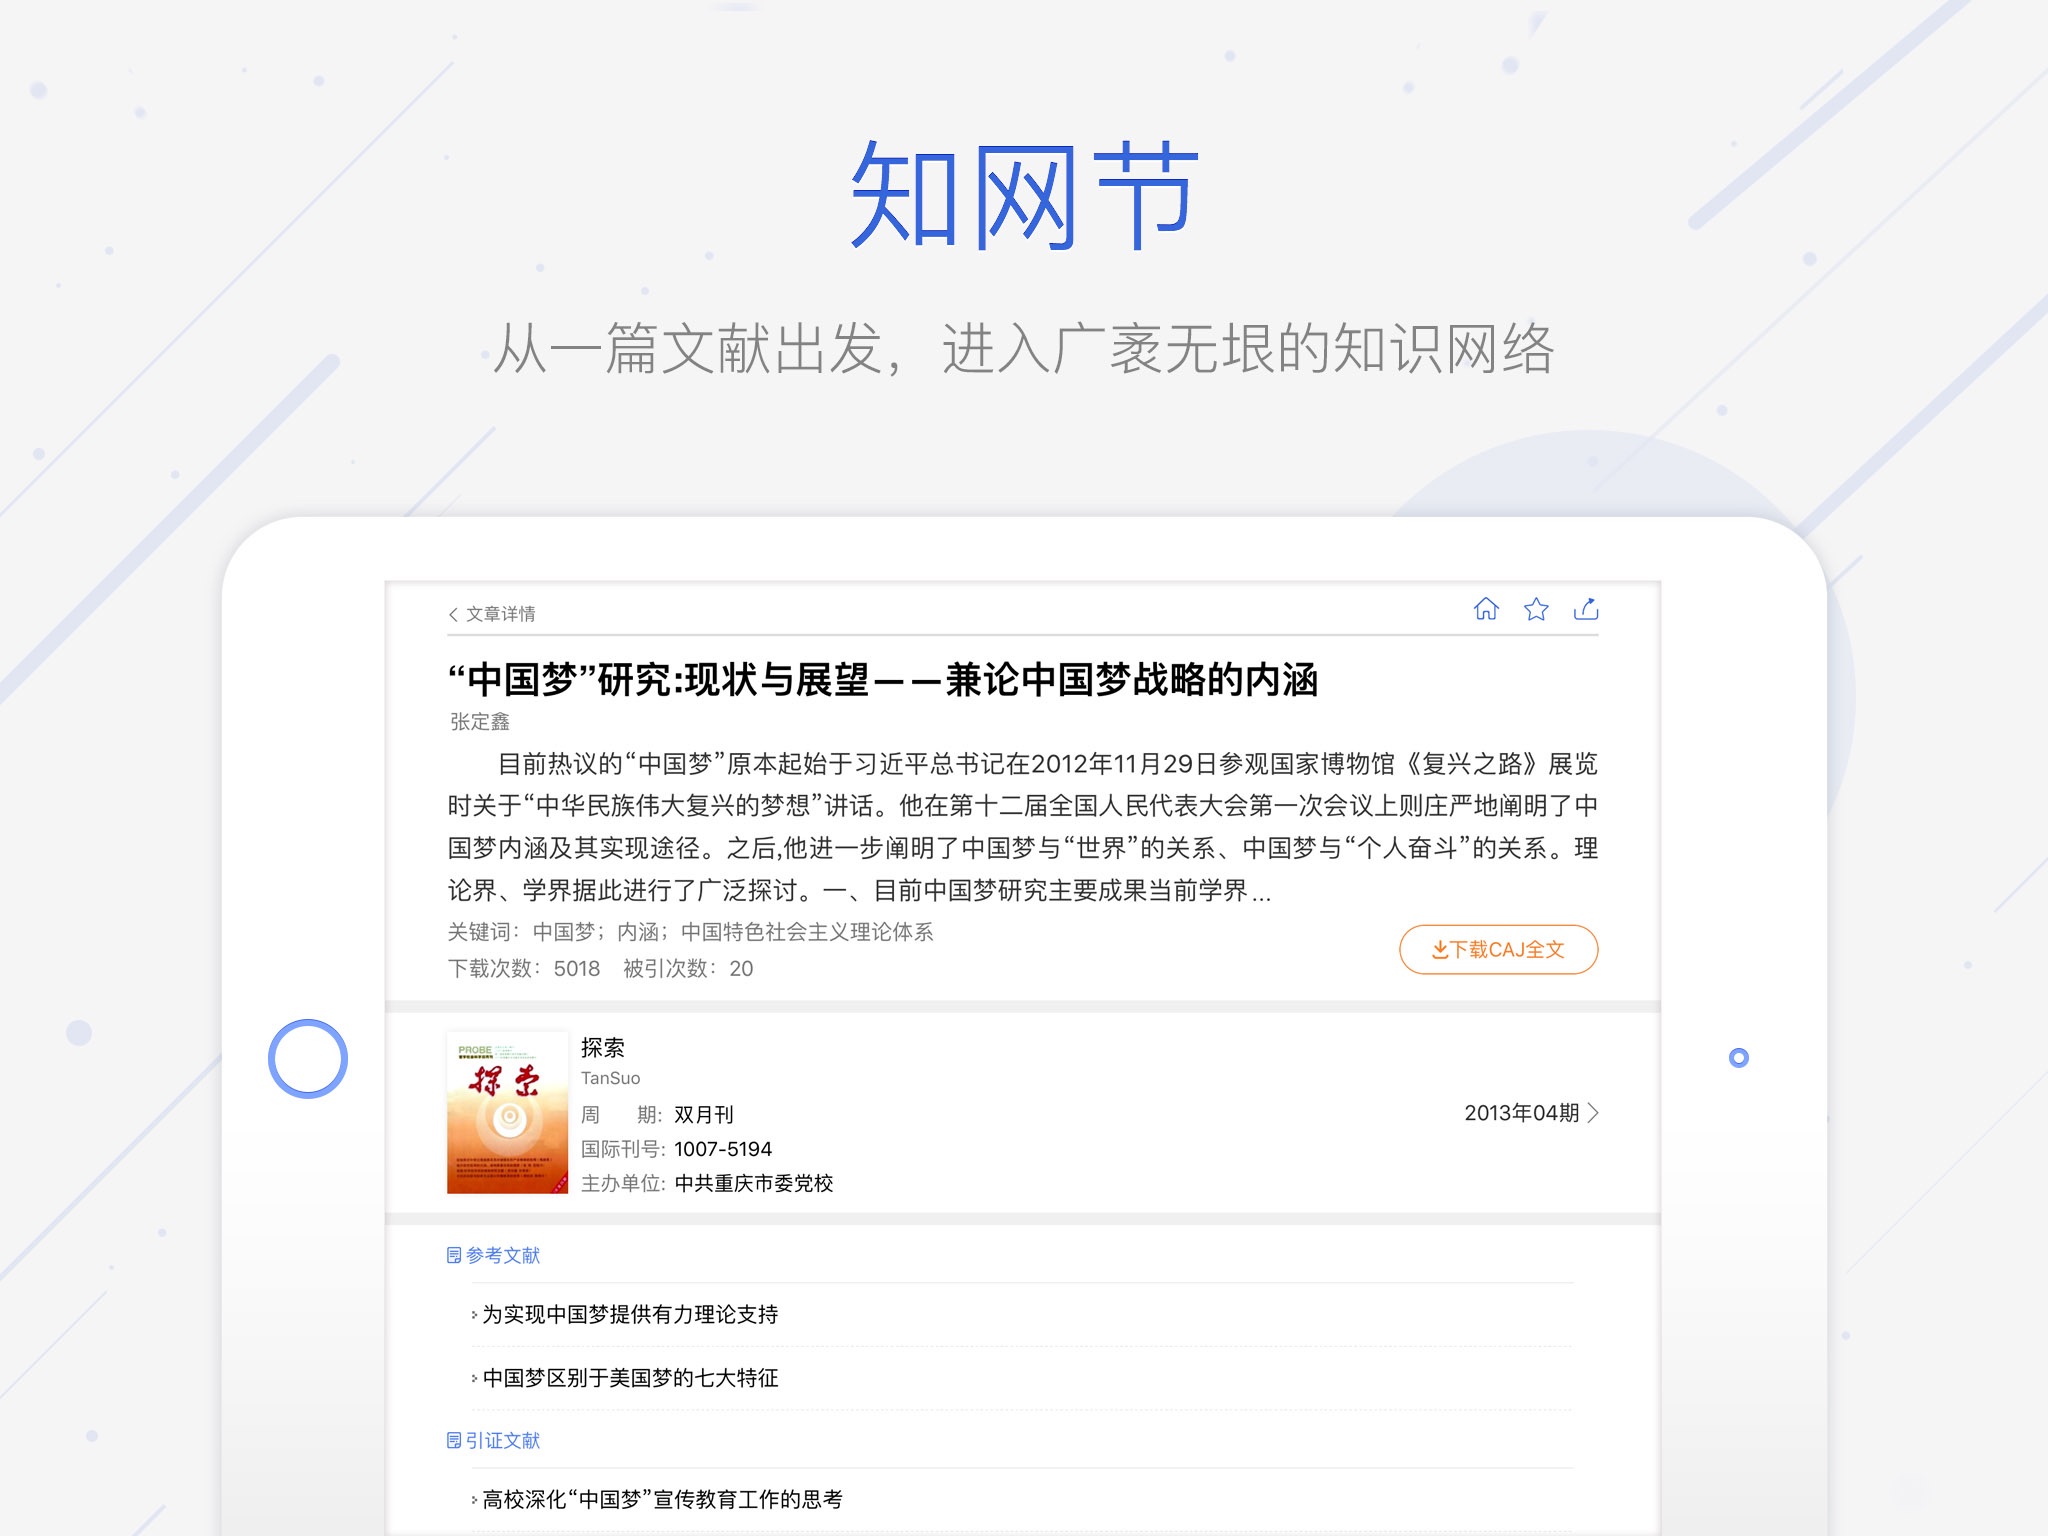 CNKI中国知网-海量、权威的知识资源尽在掌握 screenshot 4